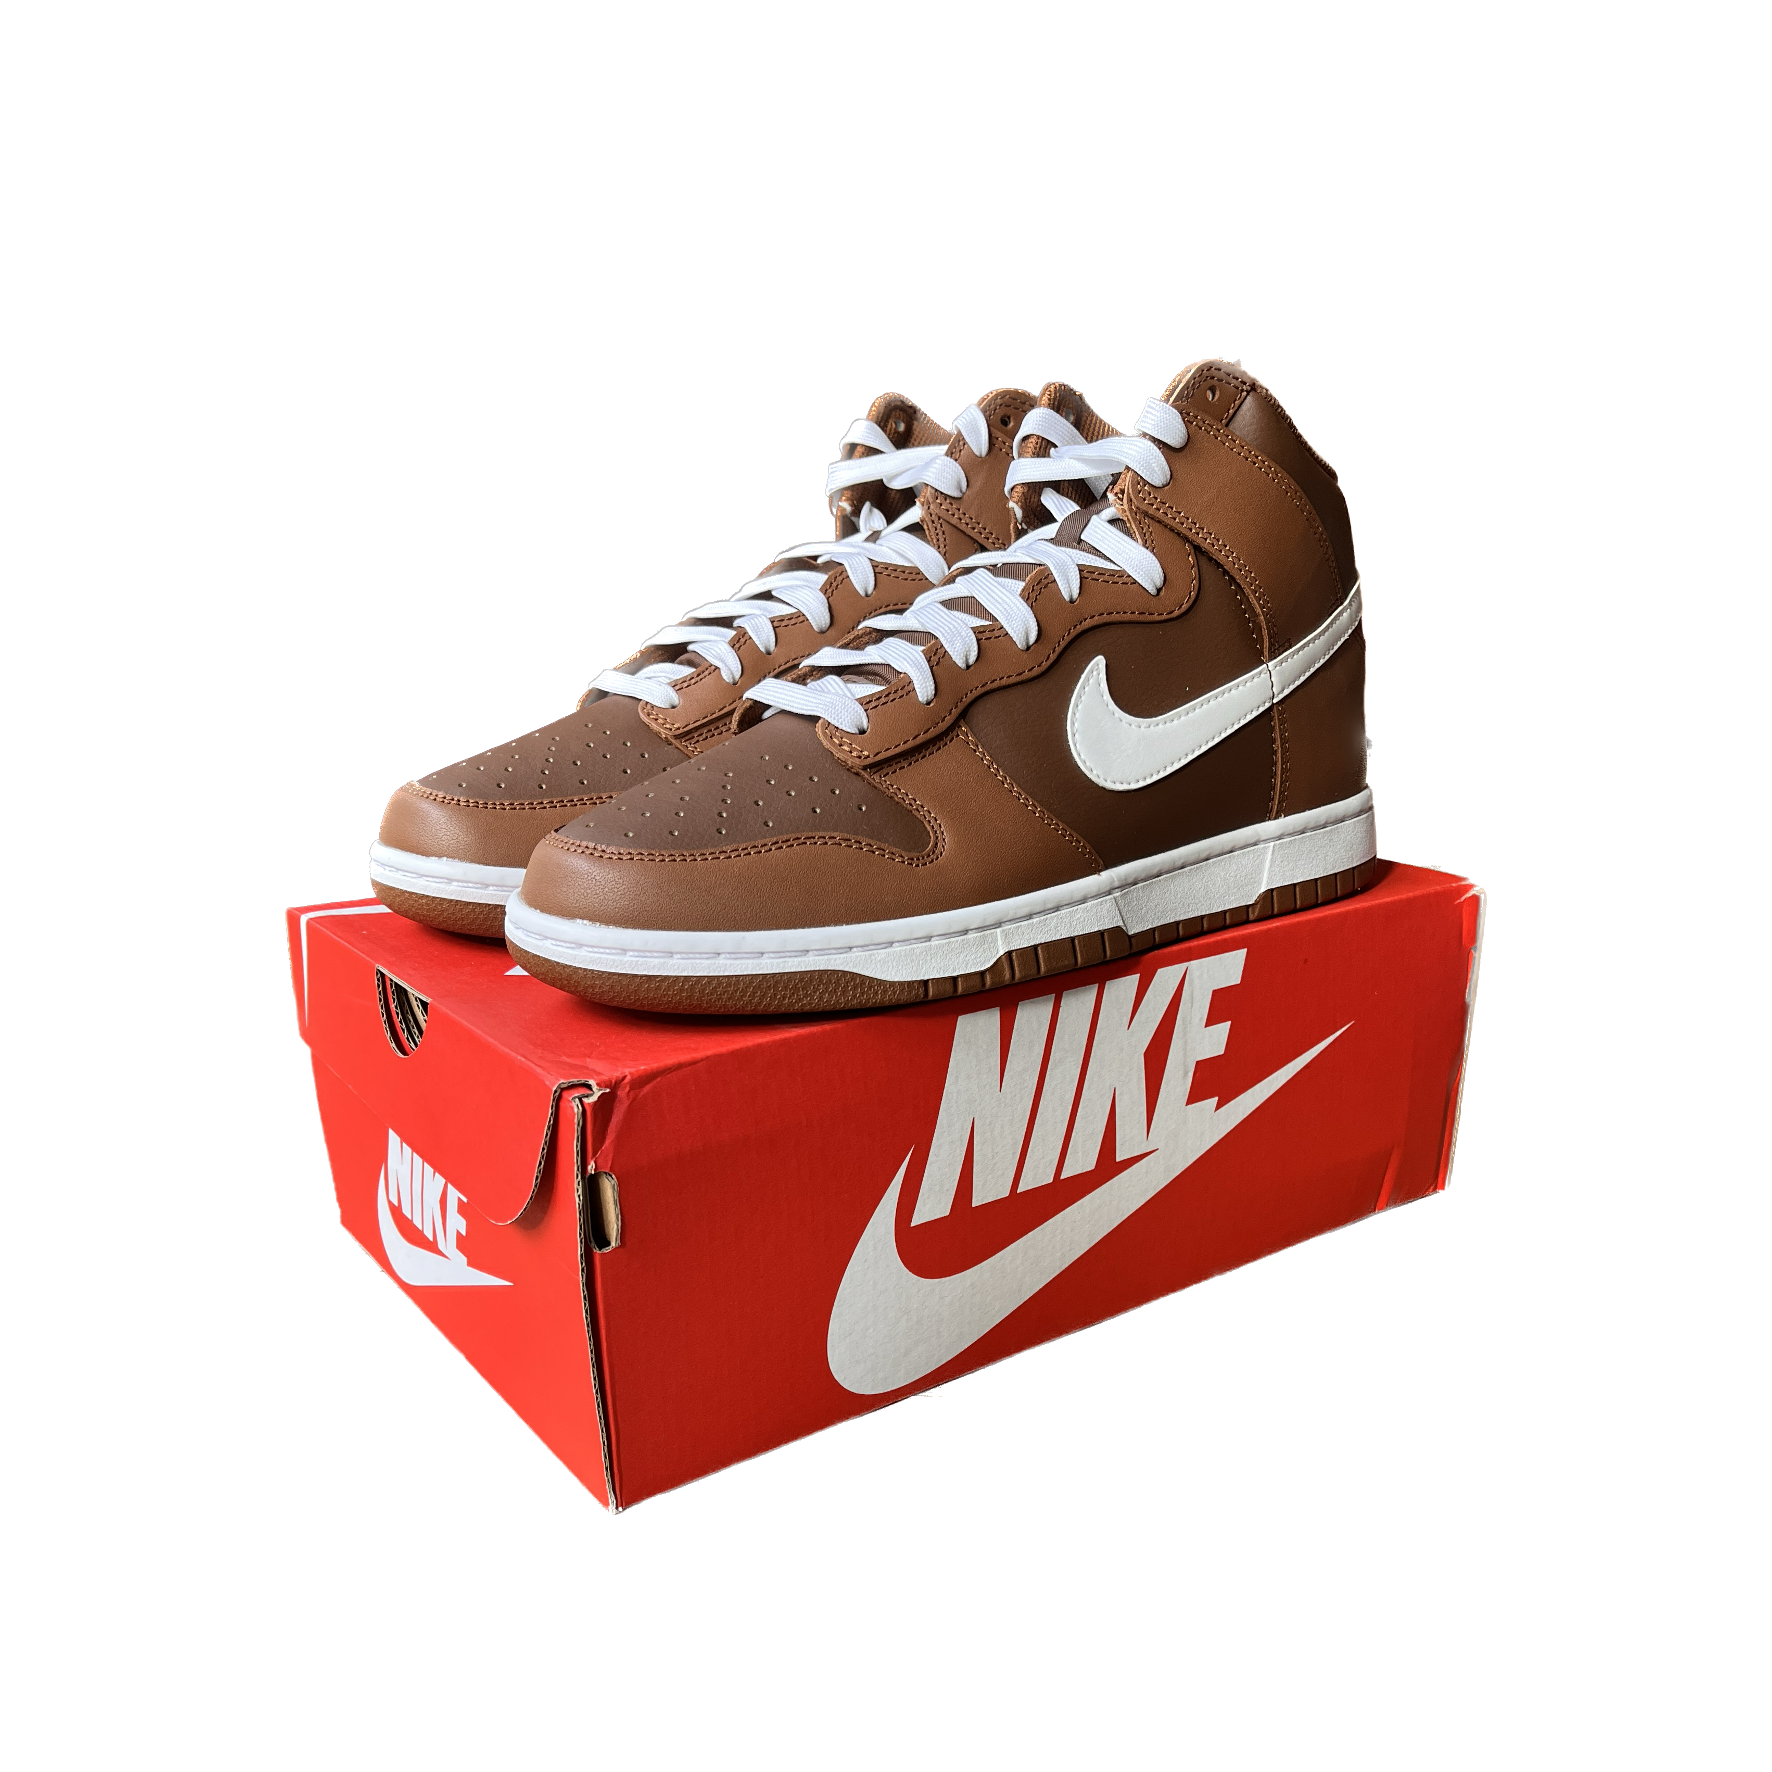 Nike Dunk High Chocolate - The Global Hype